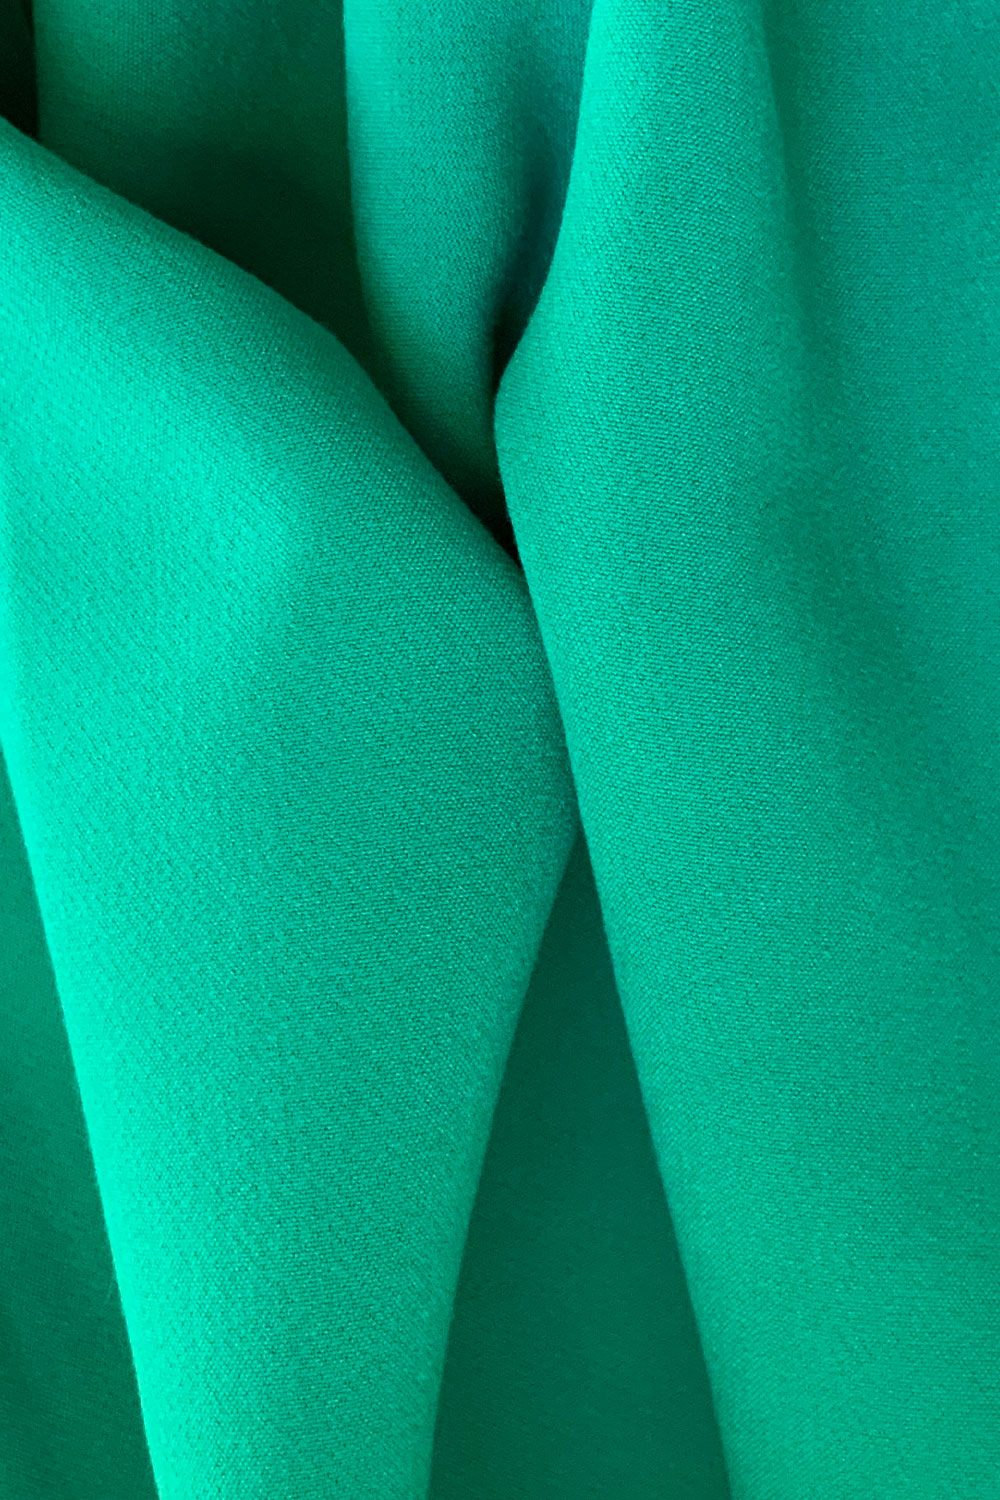 Jacket constructorgreen, green, fuchsia fabric